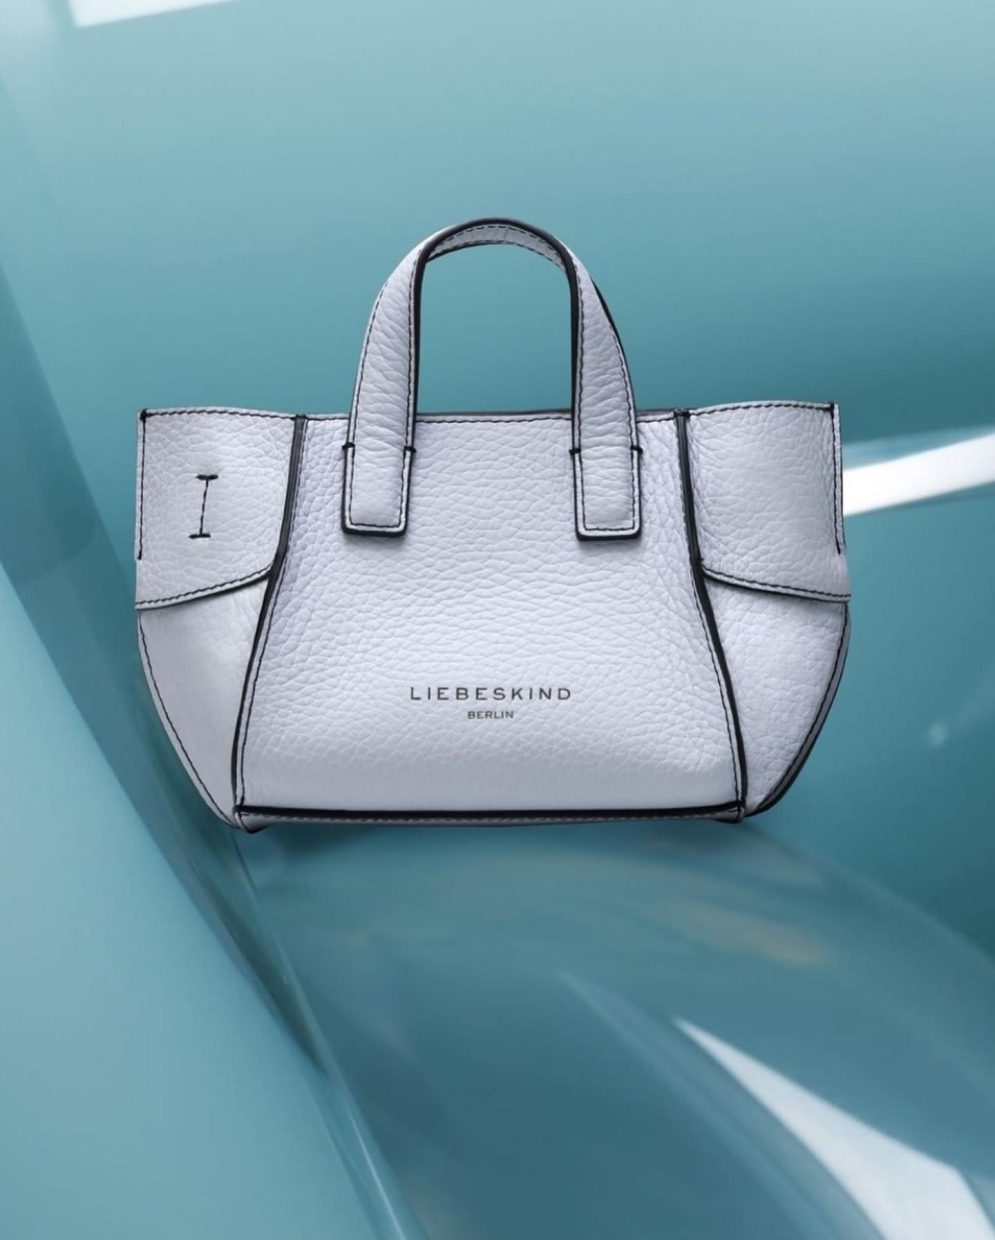 white leather handbag by Liebeskind on turquoise plexiglass background